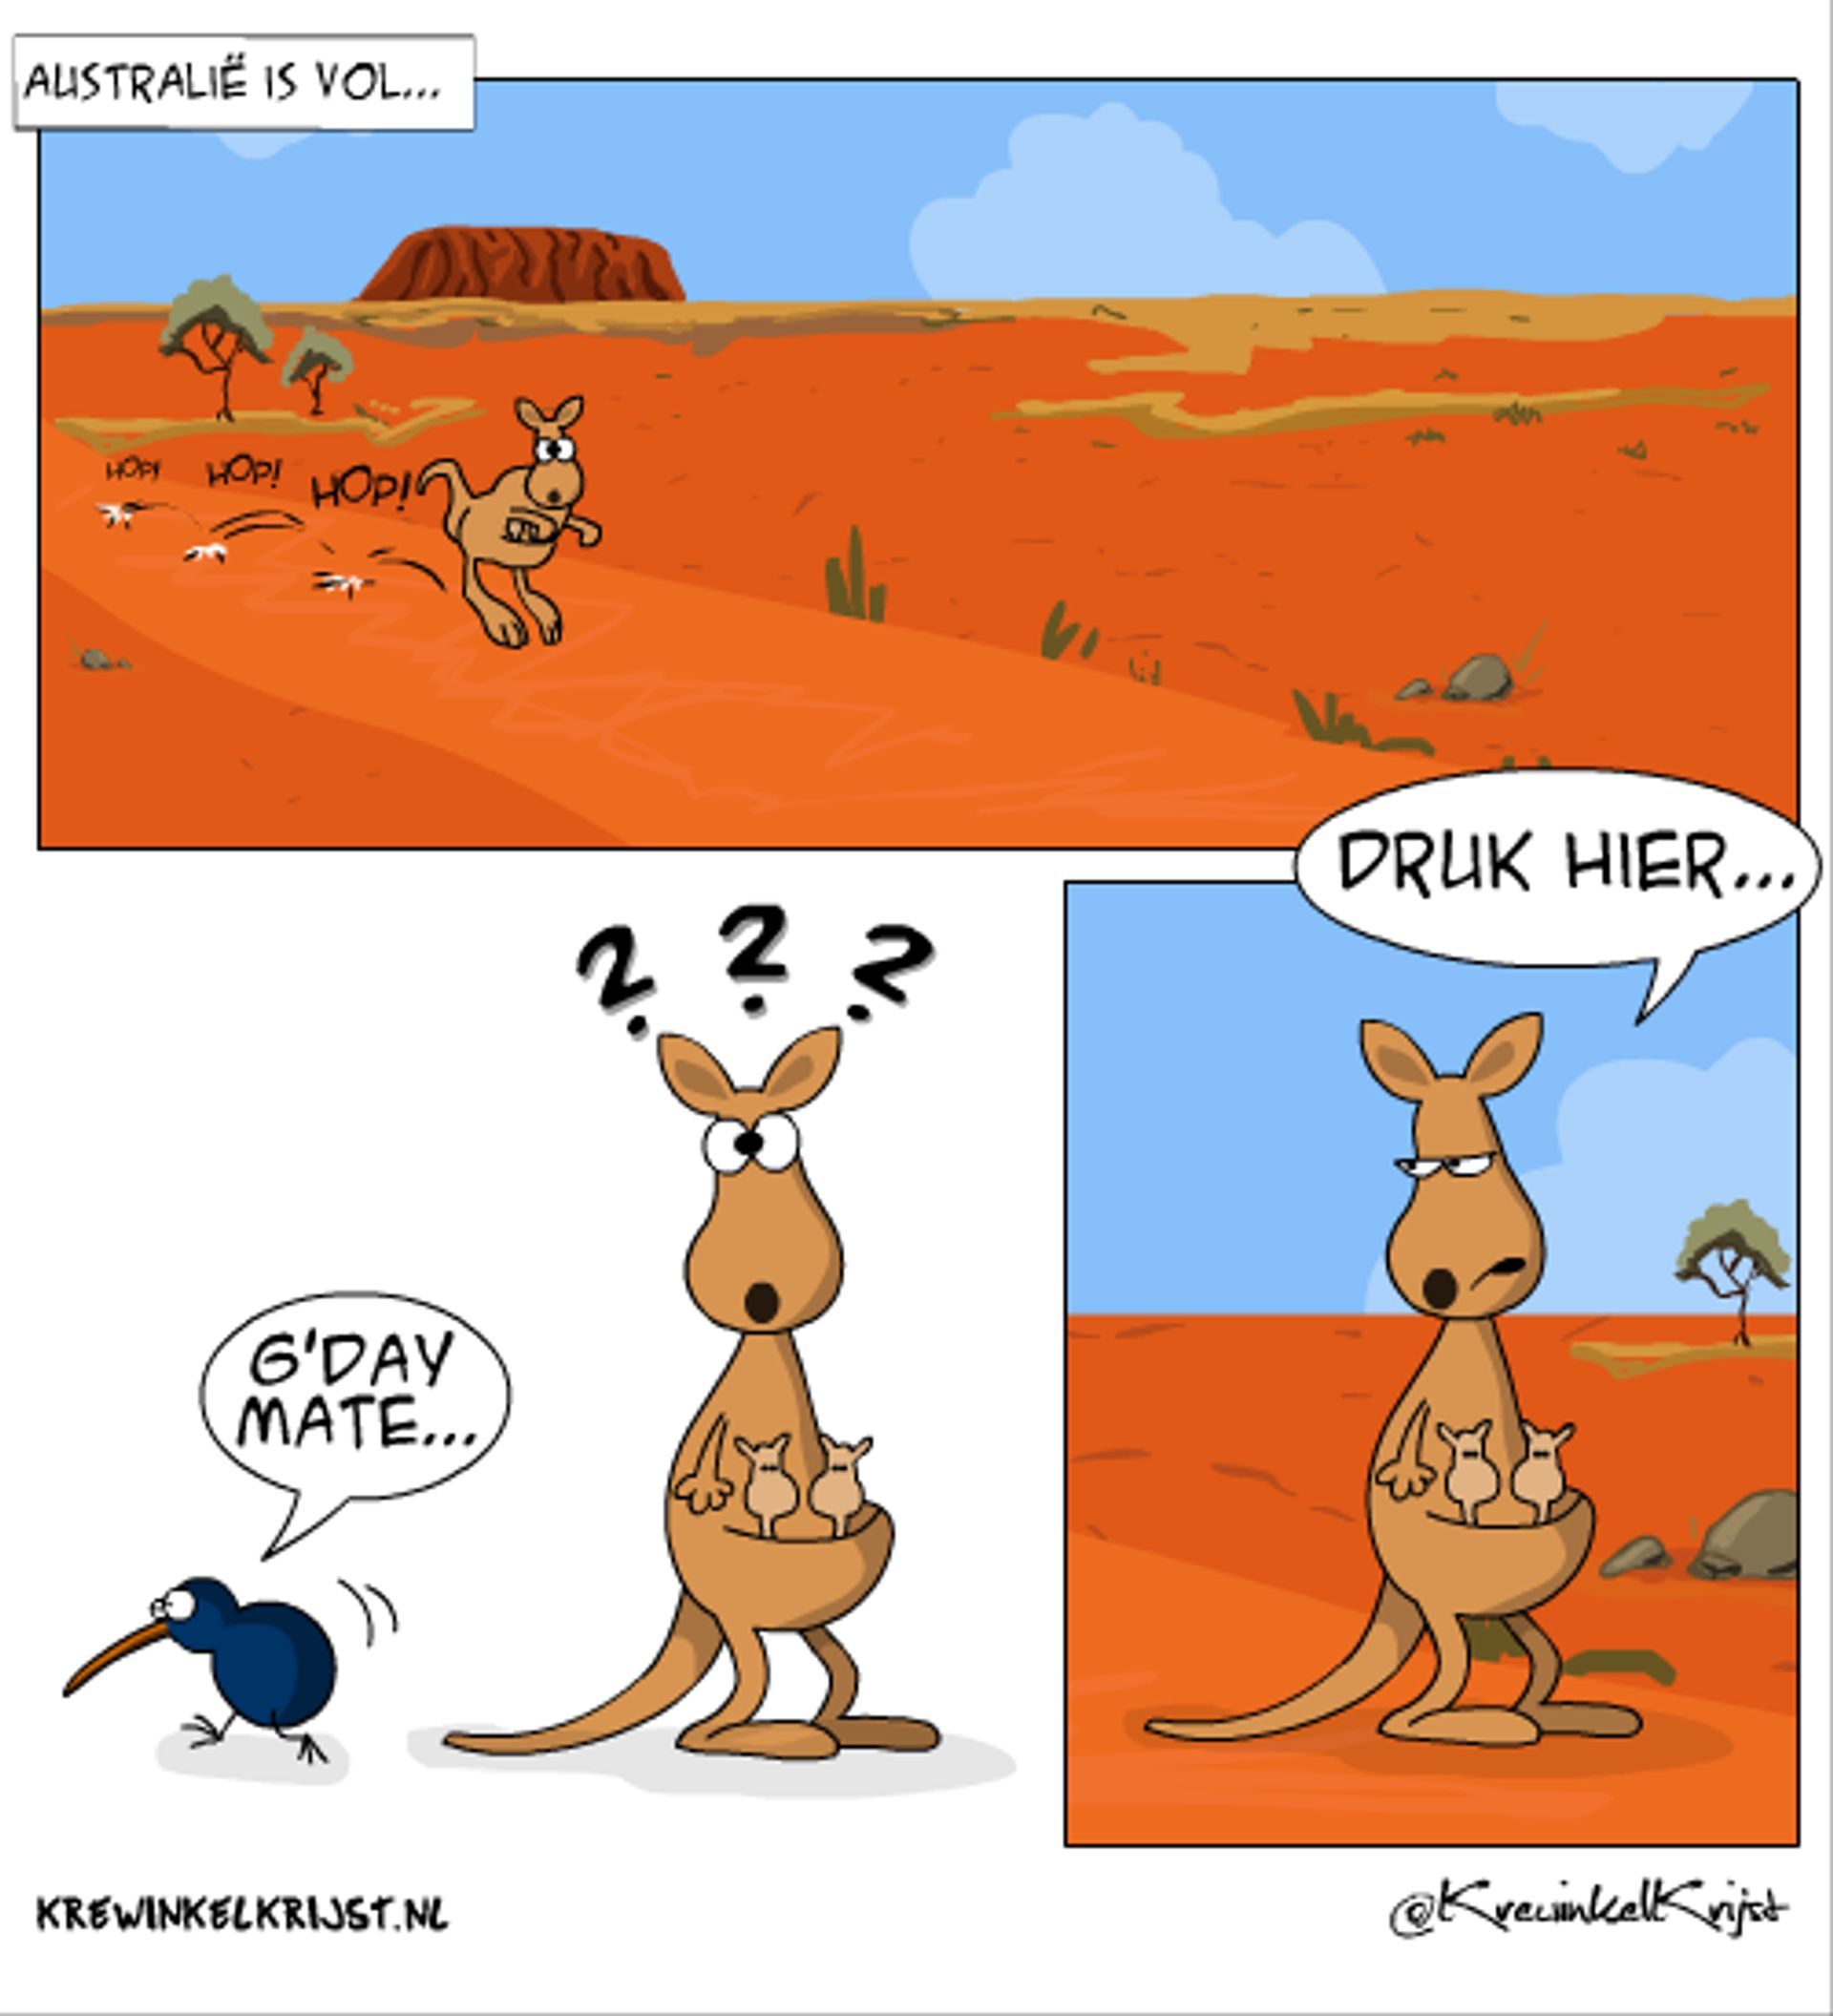 AustralieVol_cartoon_KrewinkelKrijst.png